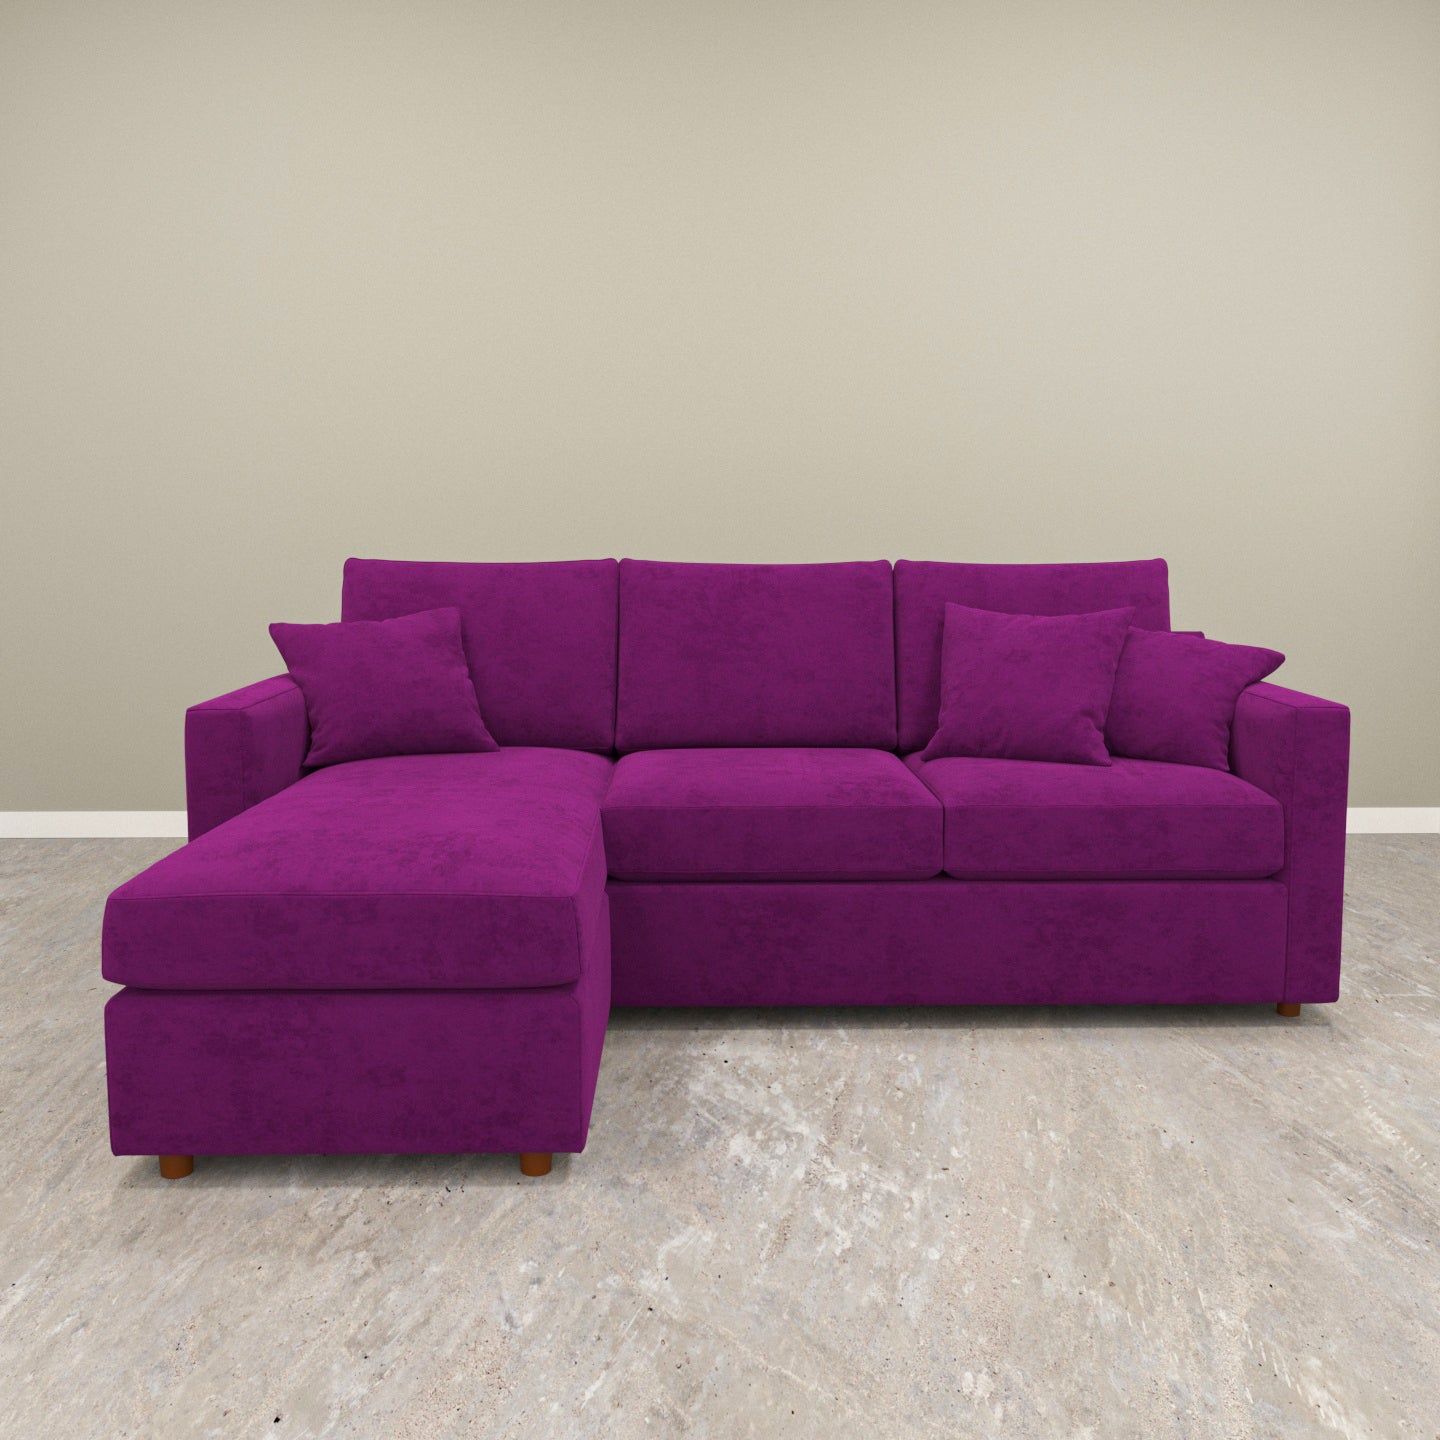 Premium Purple Coloured with Premium Comfort L Shaped 4 Seater Sofa Set for Home Sofa